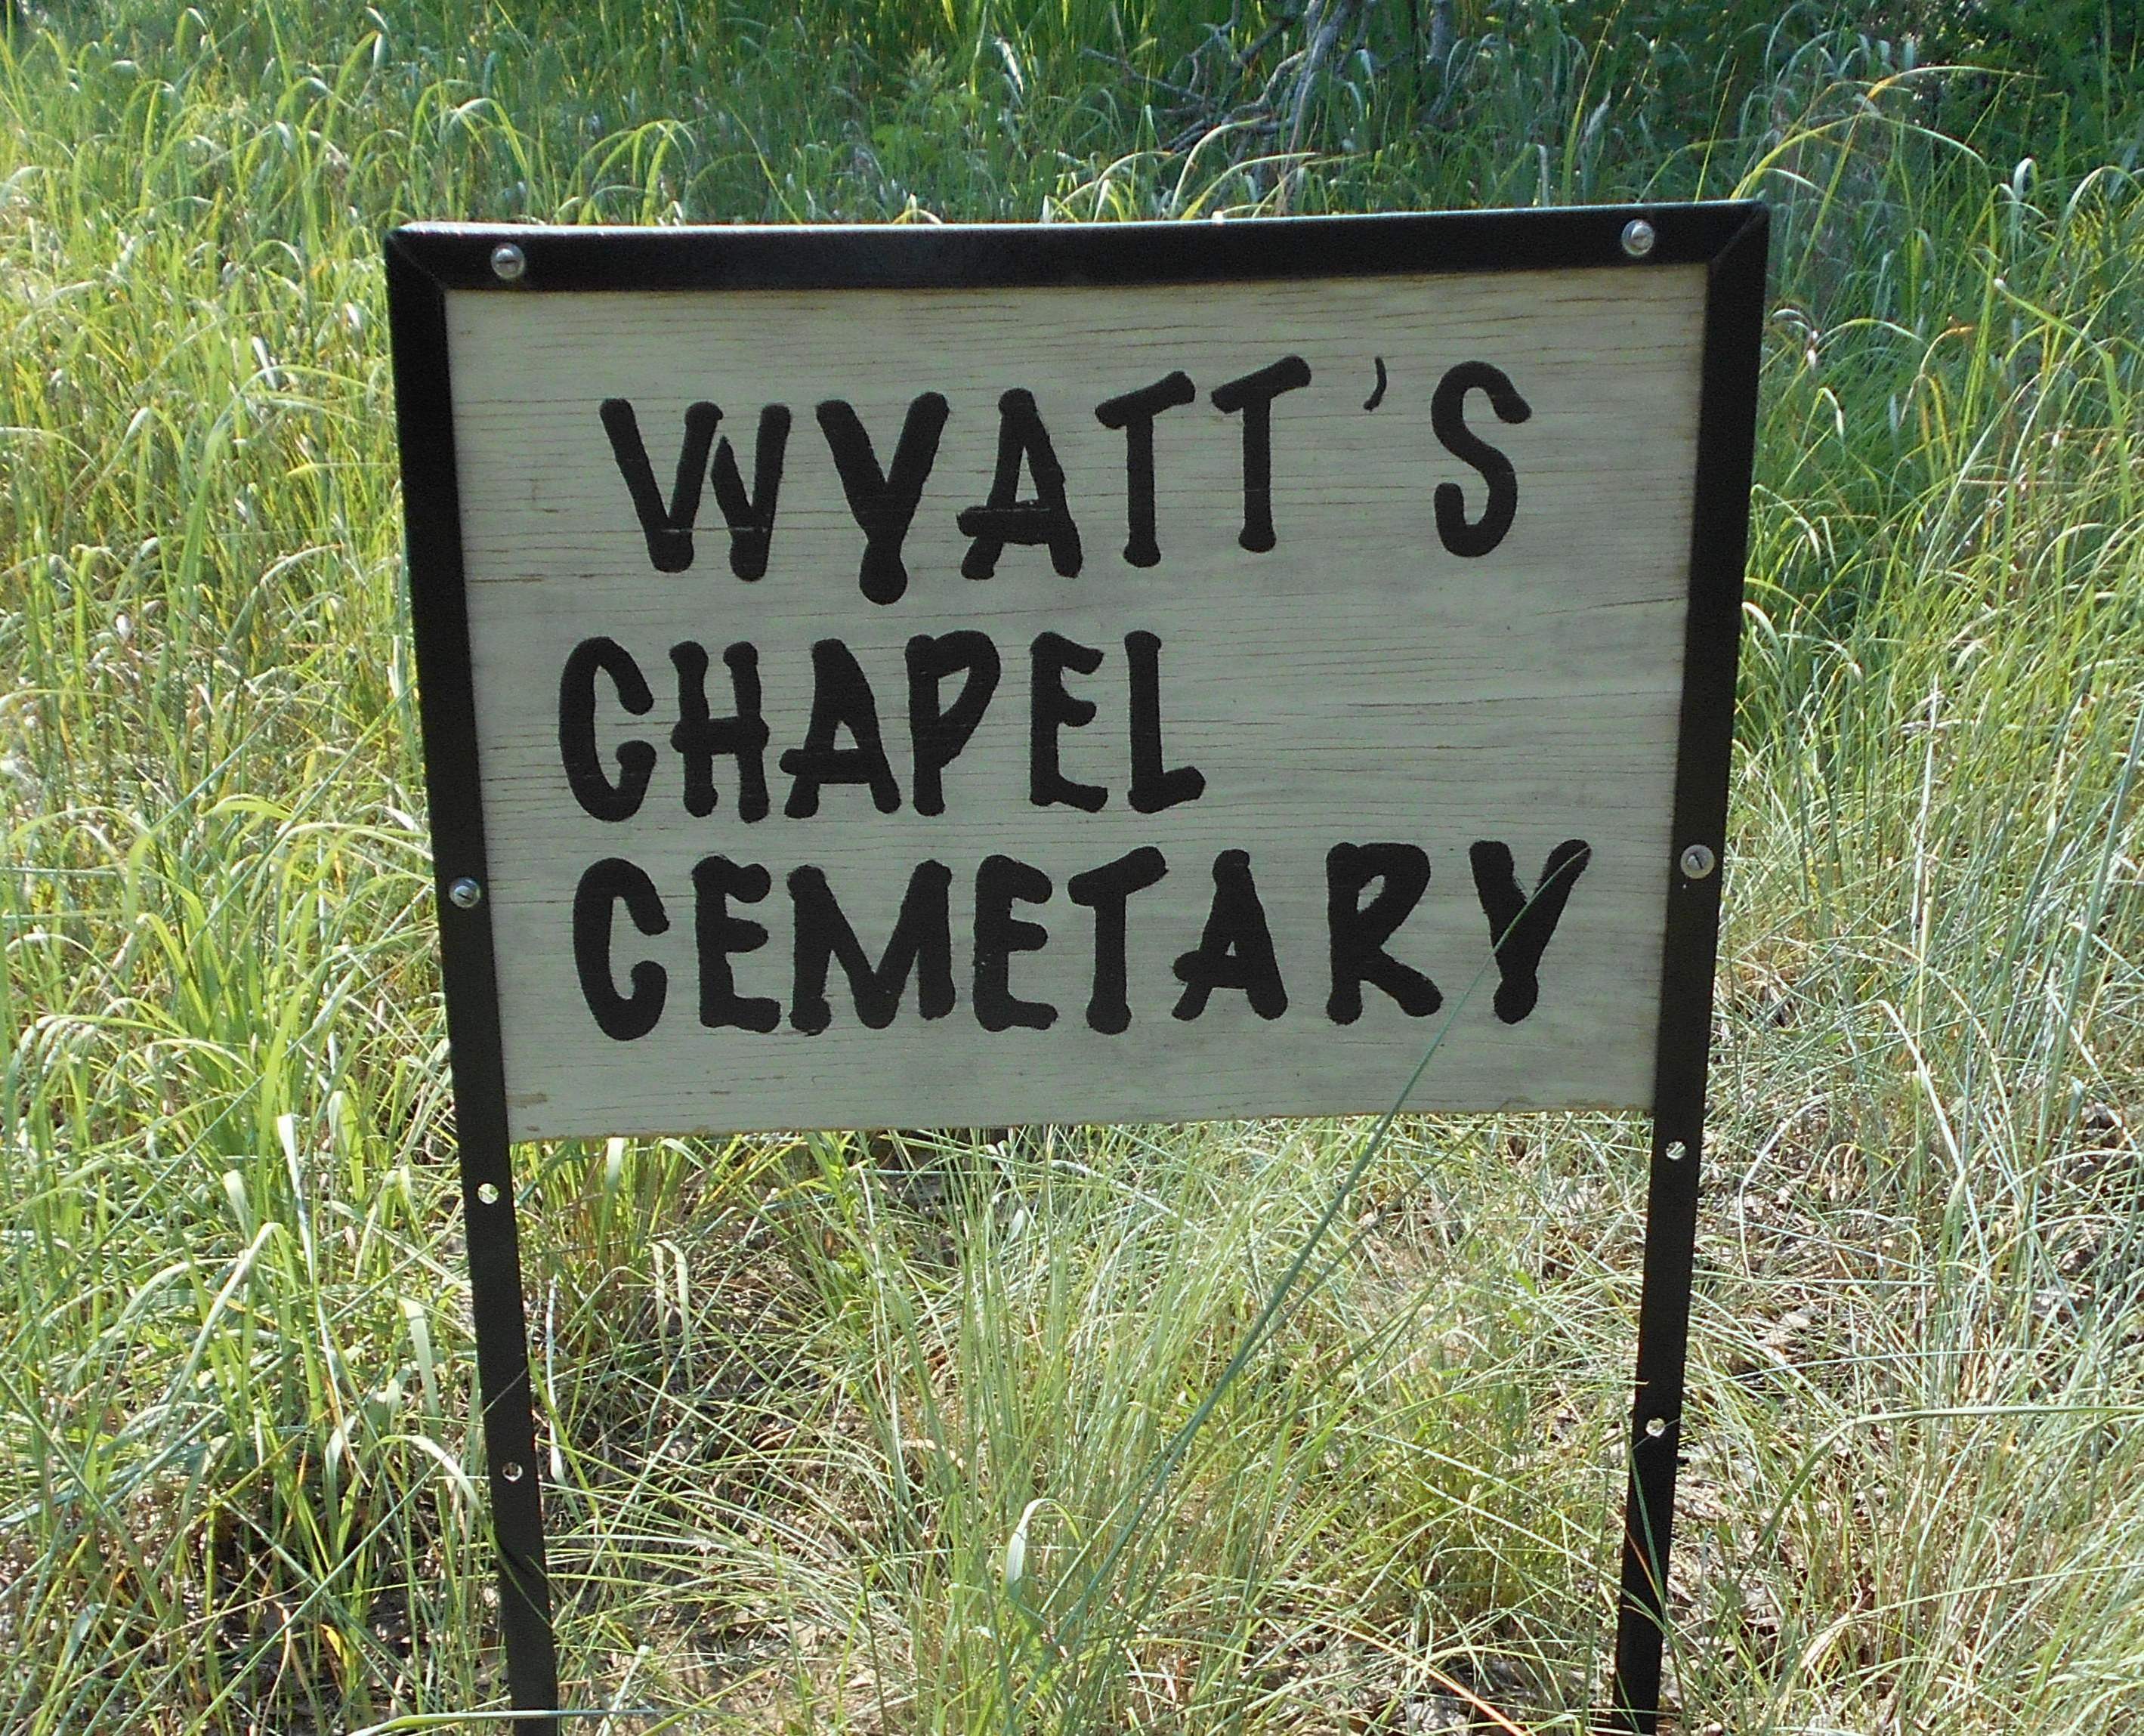 Wyatt Chapel Cemetery sign